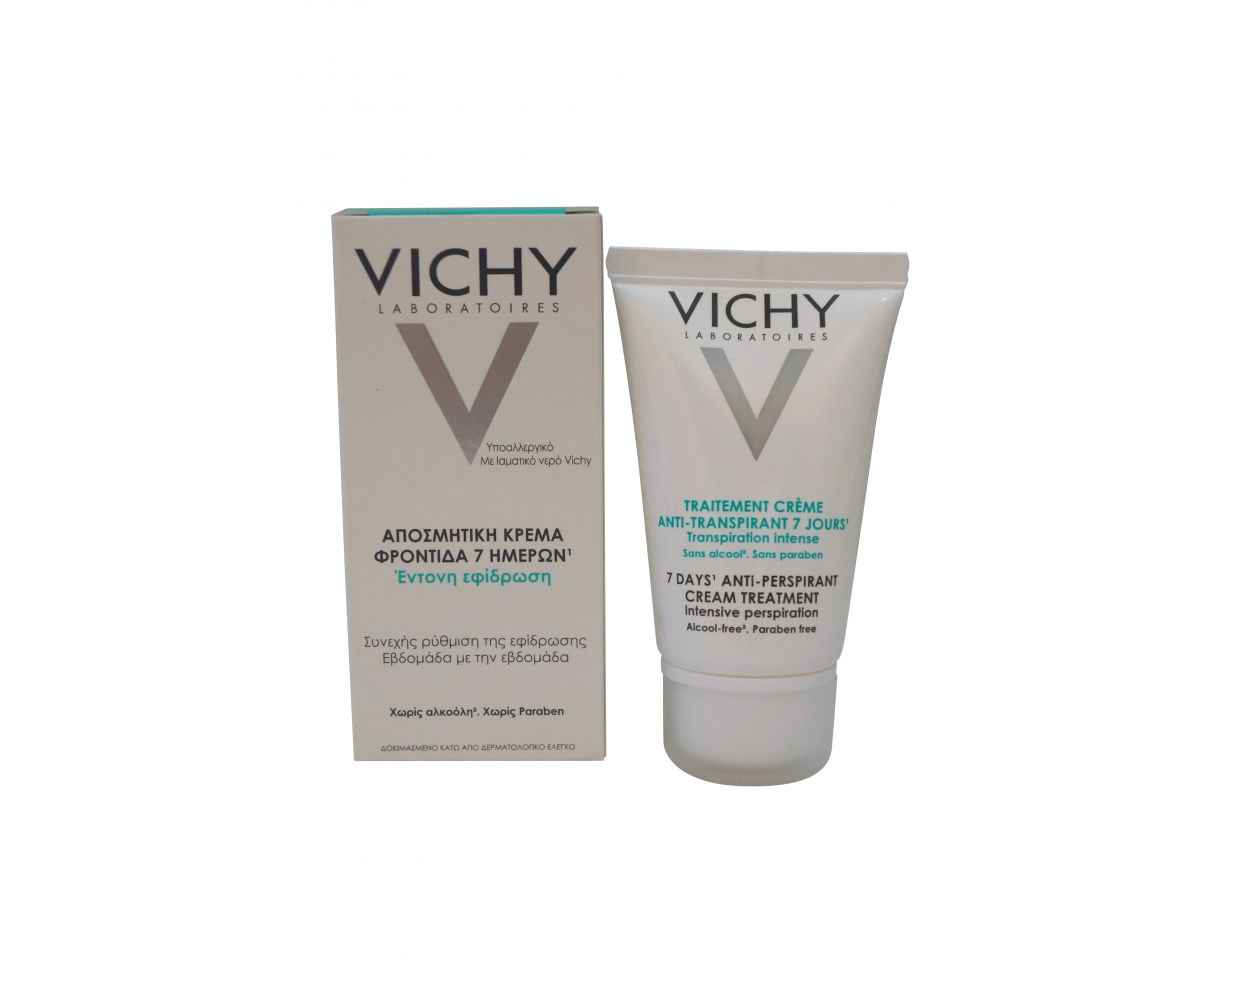 Vichy Anti-Perspirant Treatment Deodorant Cream | Antipersperant - Beautyvice.com